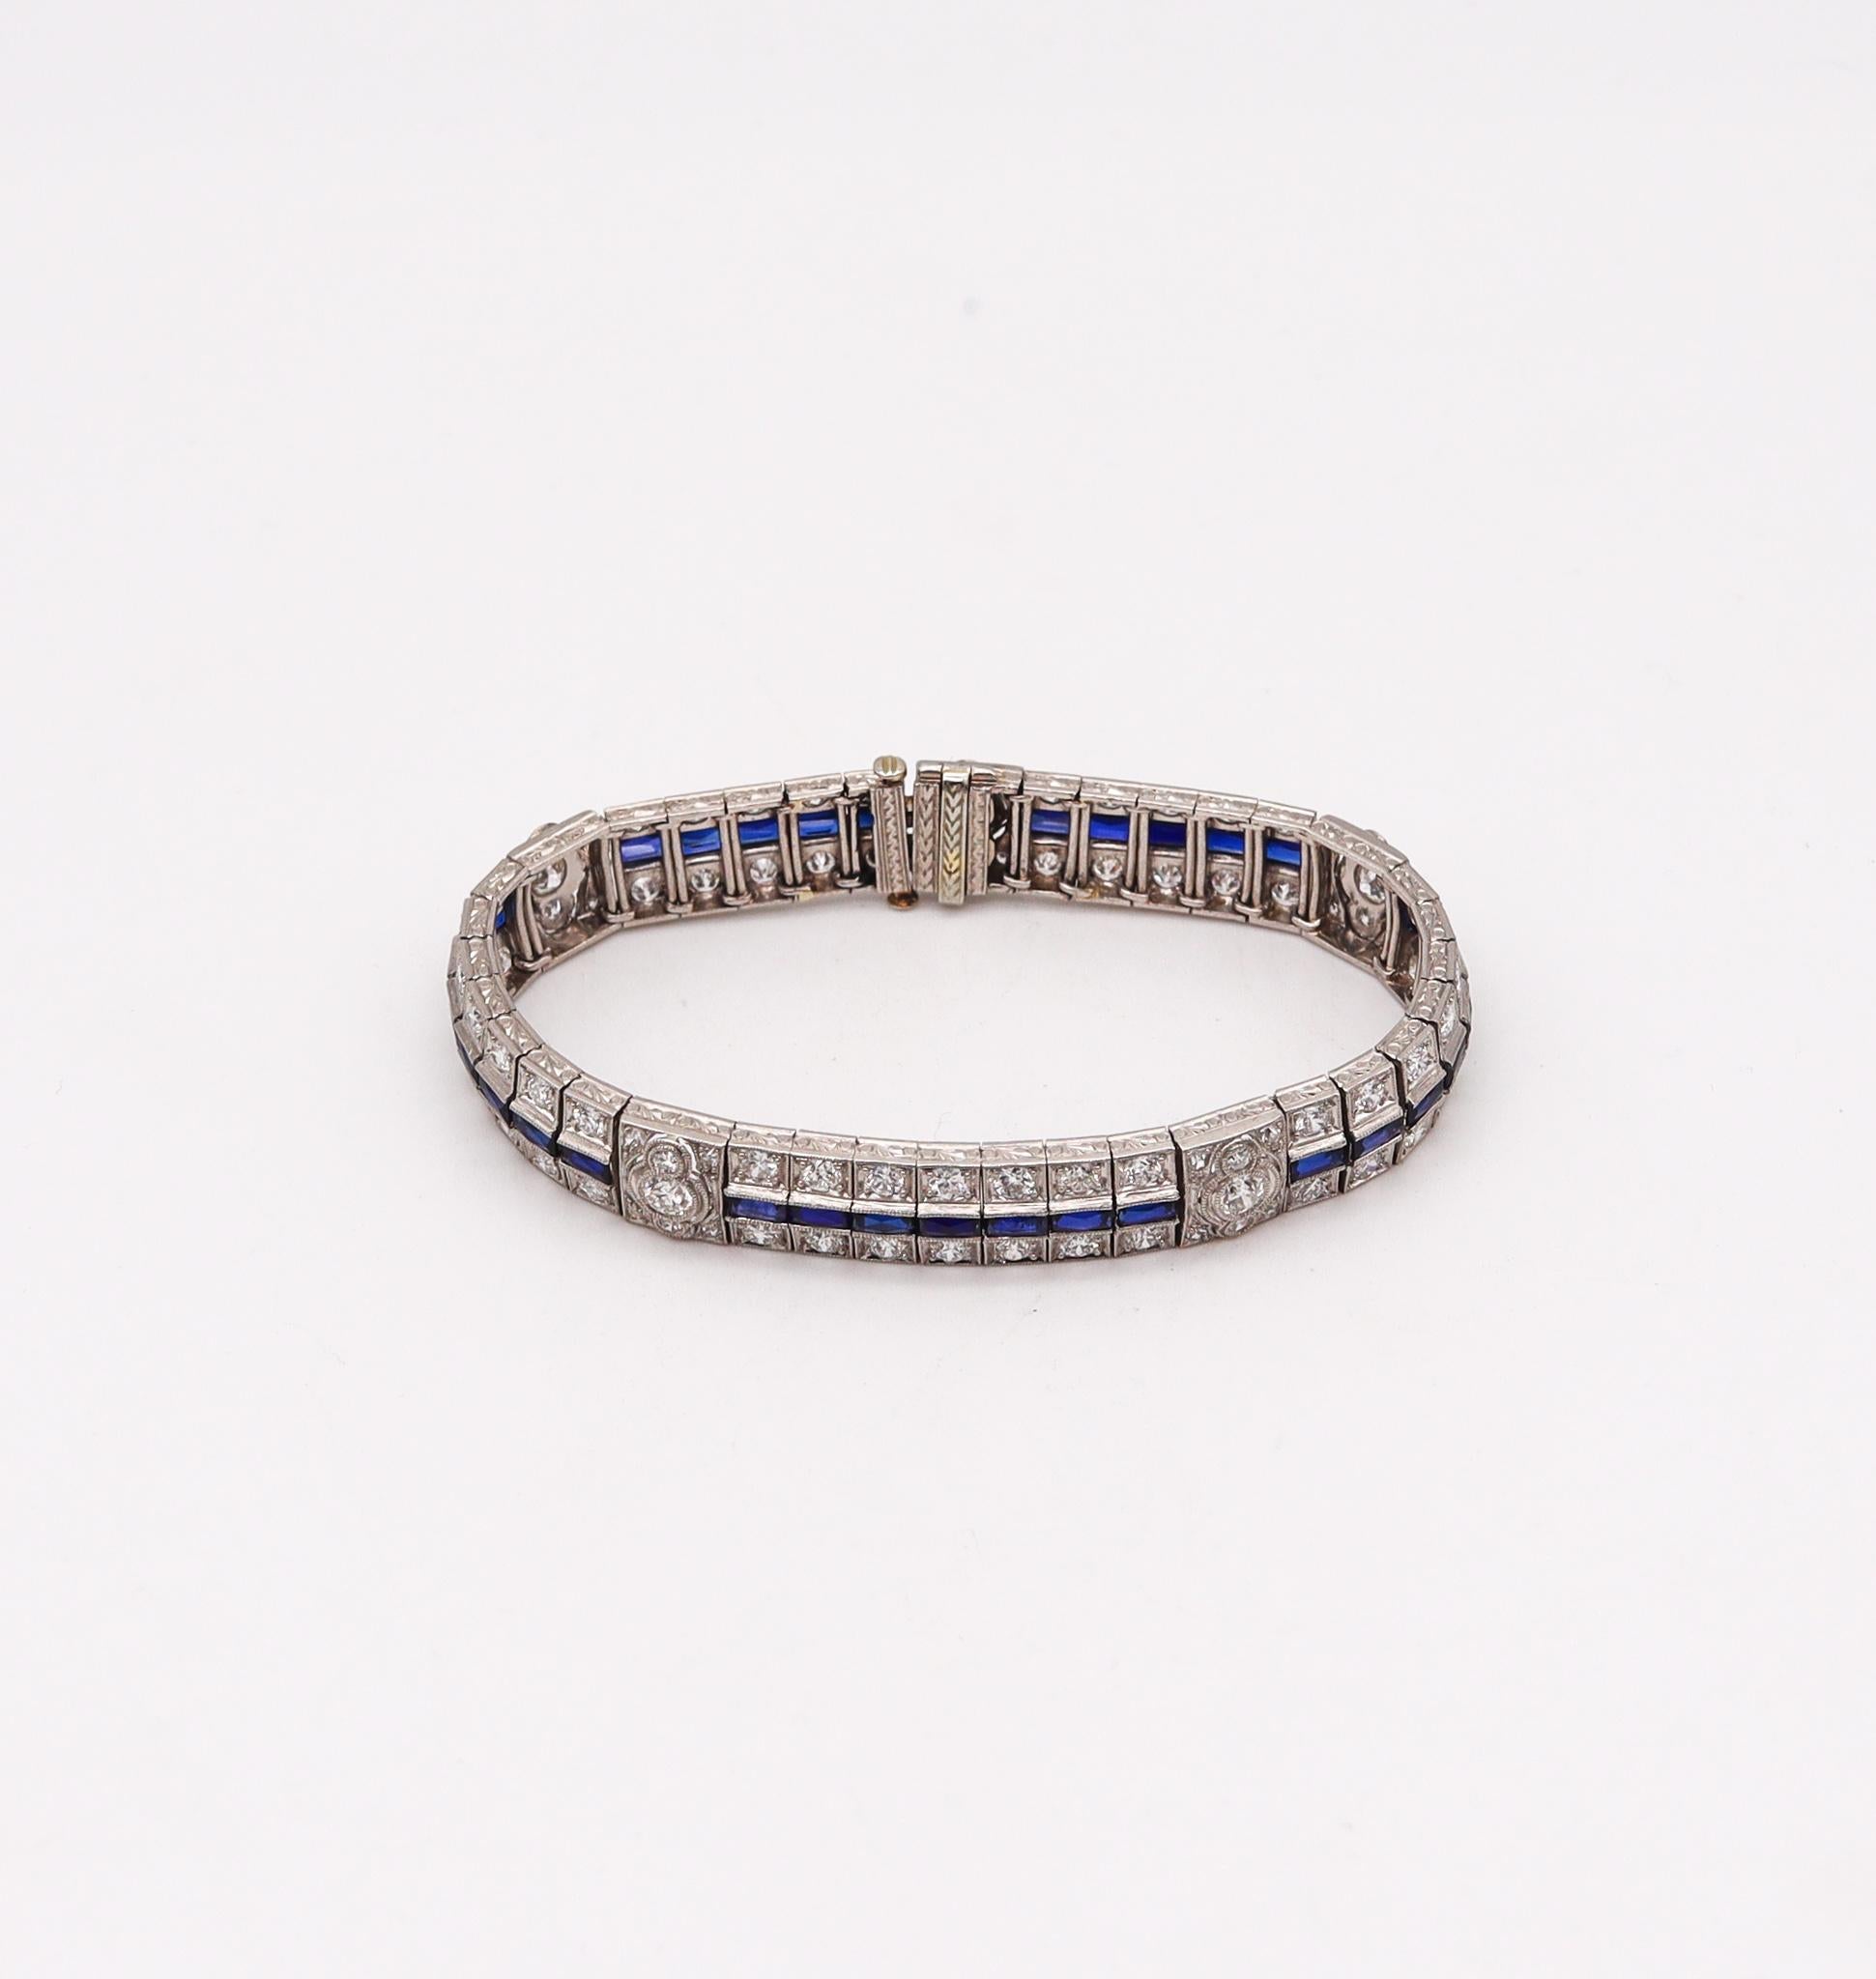 Brilliant Cut Art Deco 1930 Bracelet in Platinum with 12.33 Ctw in Diamonds and Sapphires For Sale